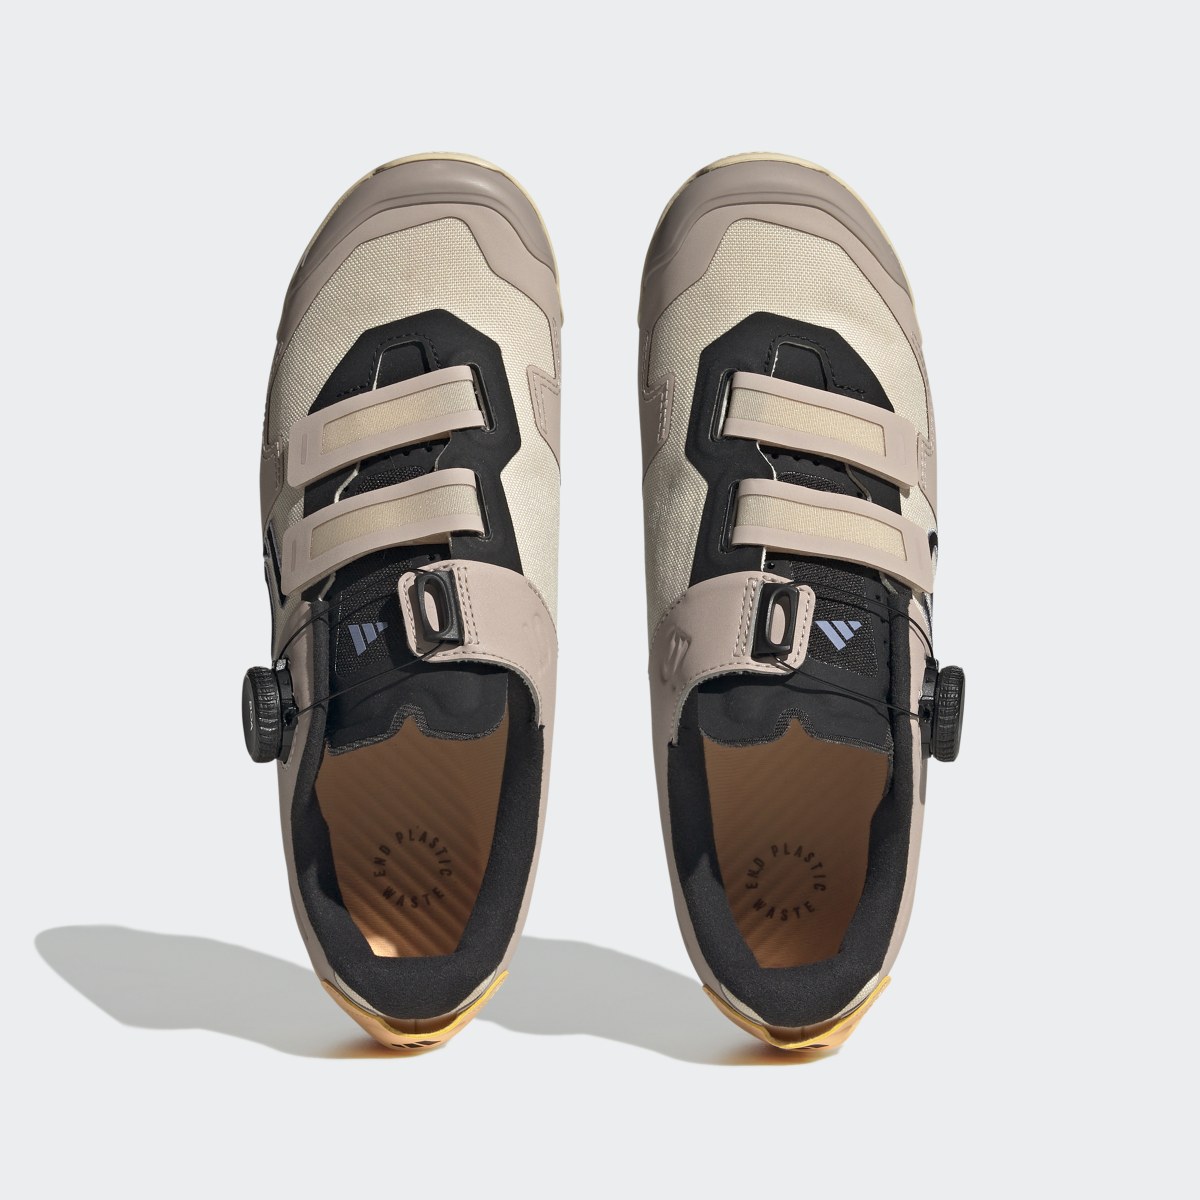 Adidas Five Ten Kestrel BOA Shoes. 8